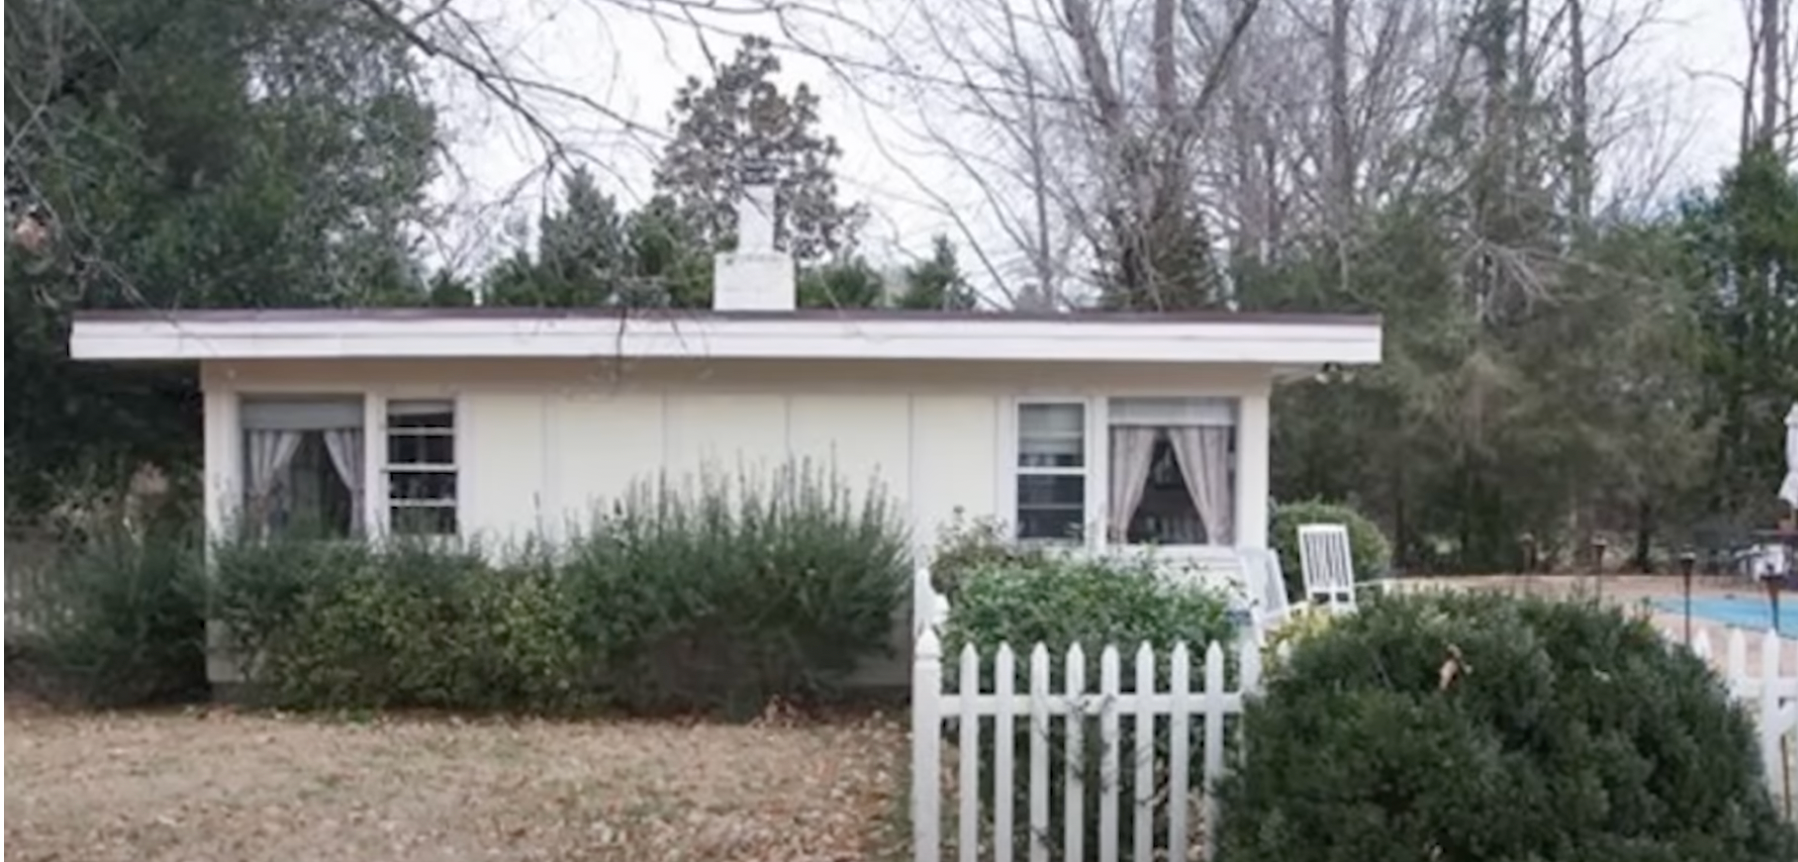 Una imagen de la casa de la piscina de la familia de Reese Witherspoon y Jim Toth en Nashville. | Foto: YouTube/@FamousEntertainment